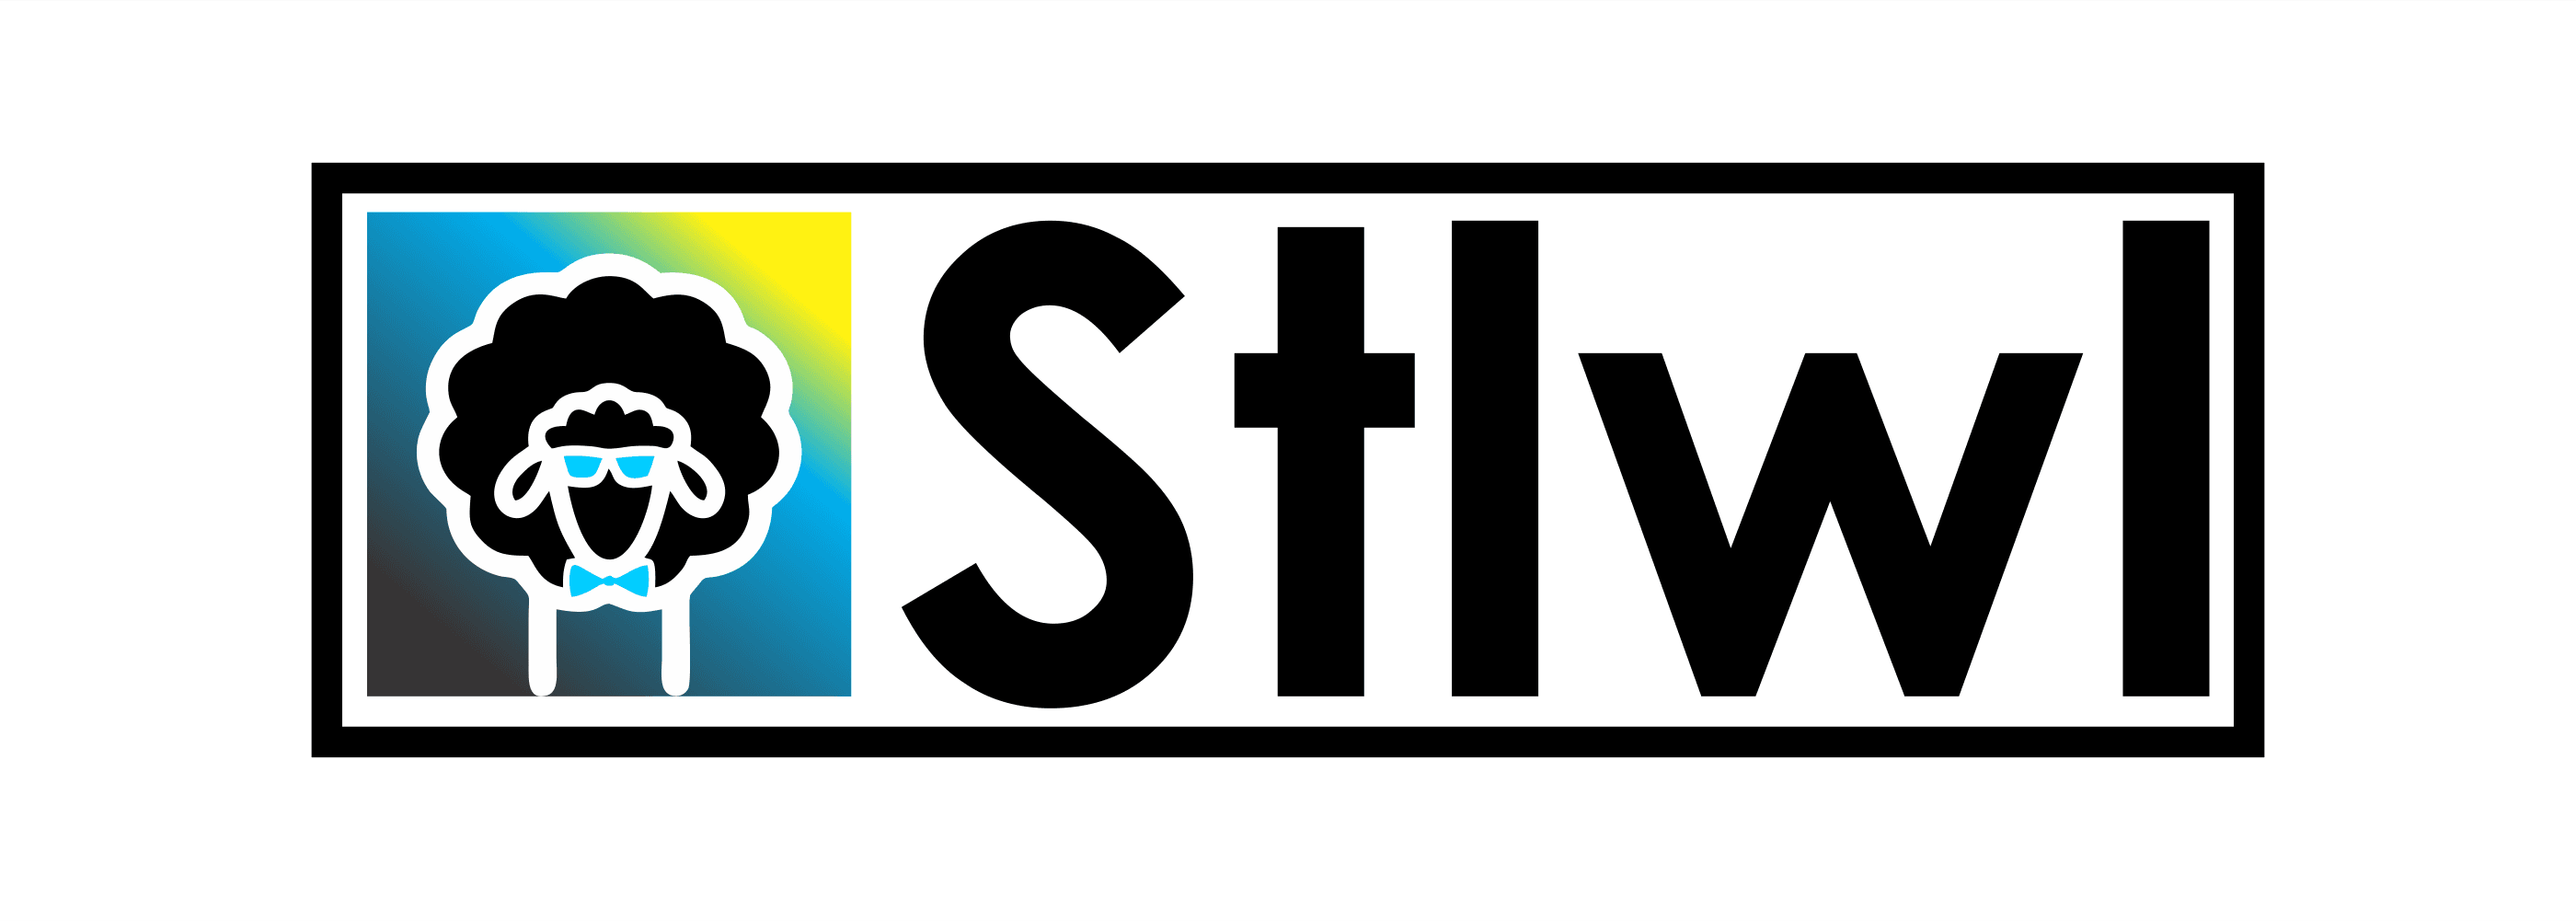 STLWL_Creative-Colab bannière